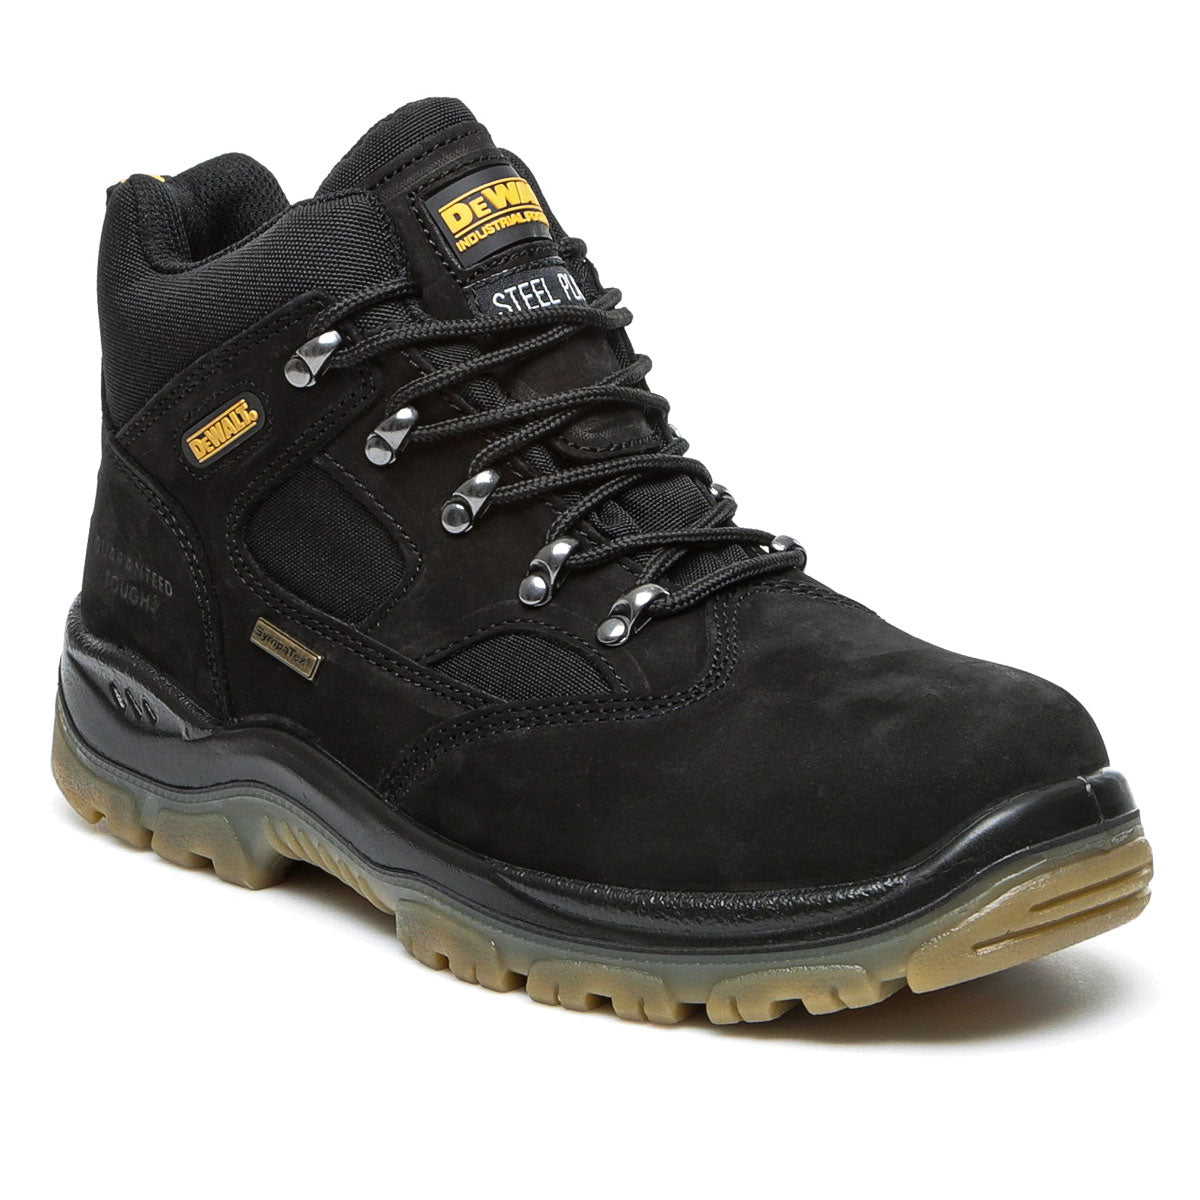 DeWalt Challenger Black Waterproof Safety Hiker Boots - Shoe Store Direct